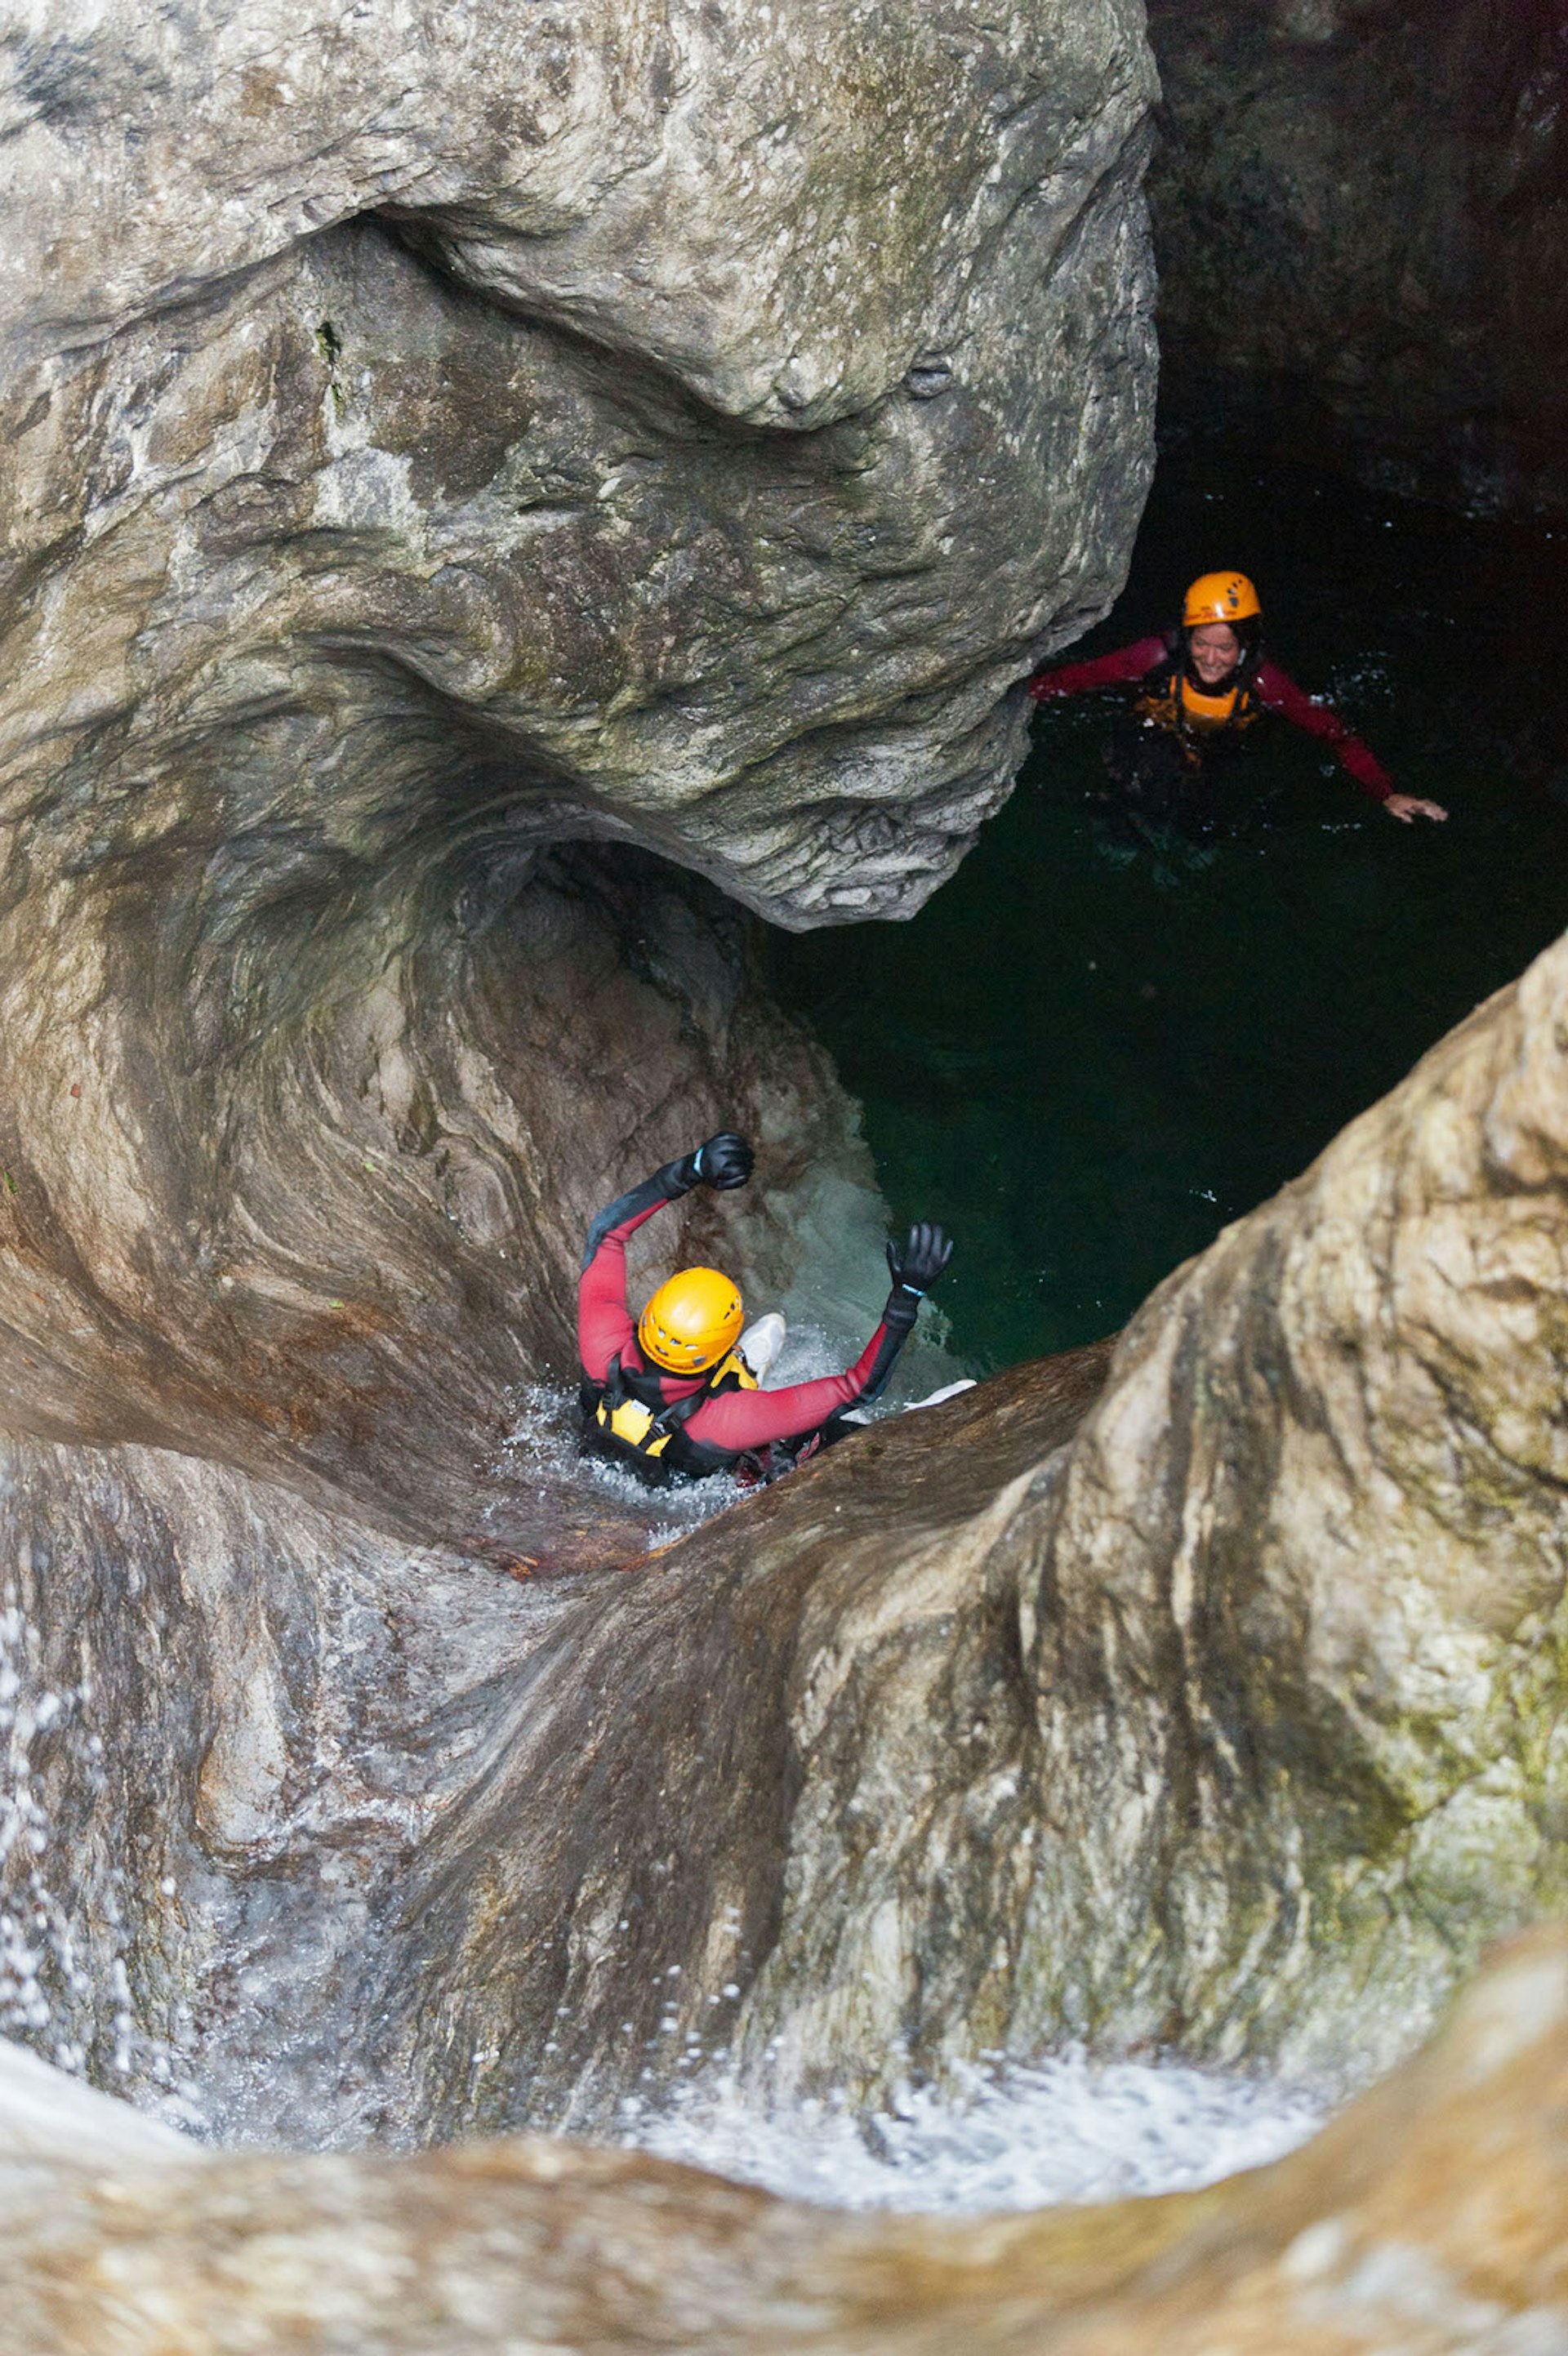 A helmeted canyoner slides down a rock chute into a deep pool